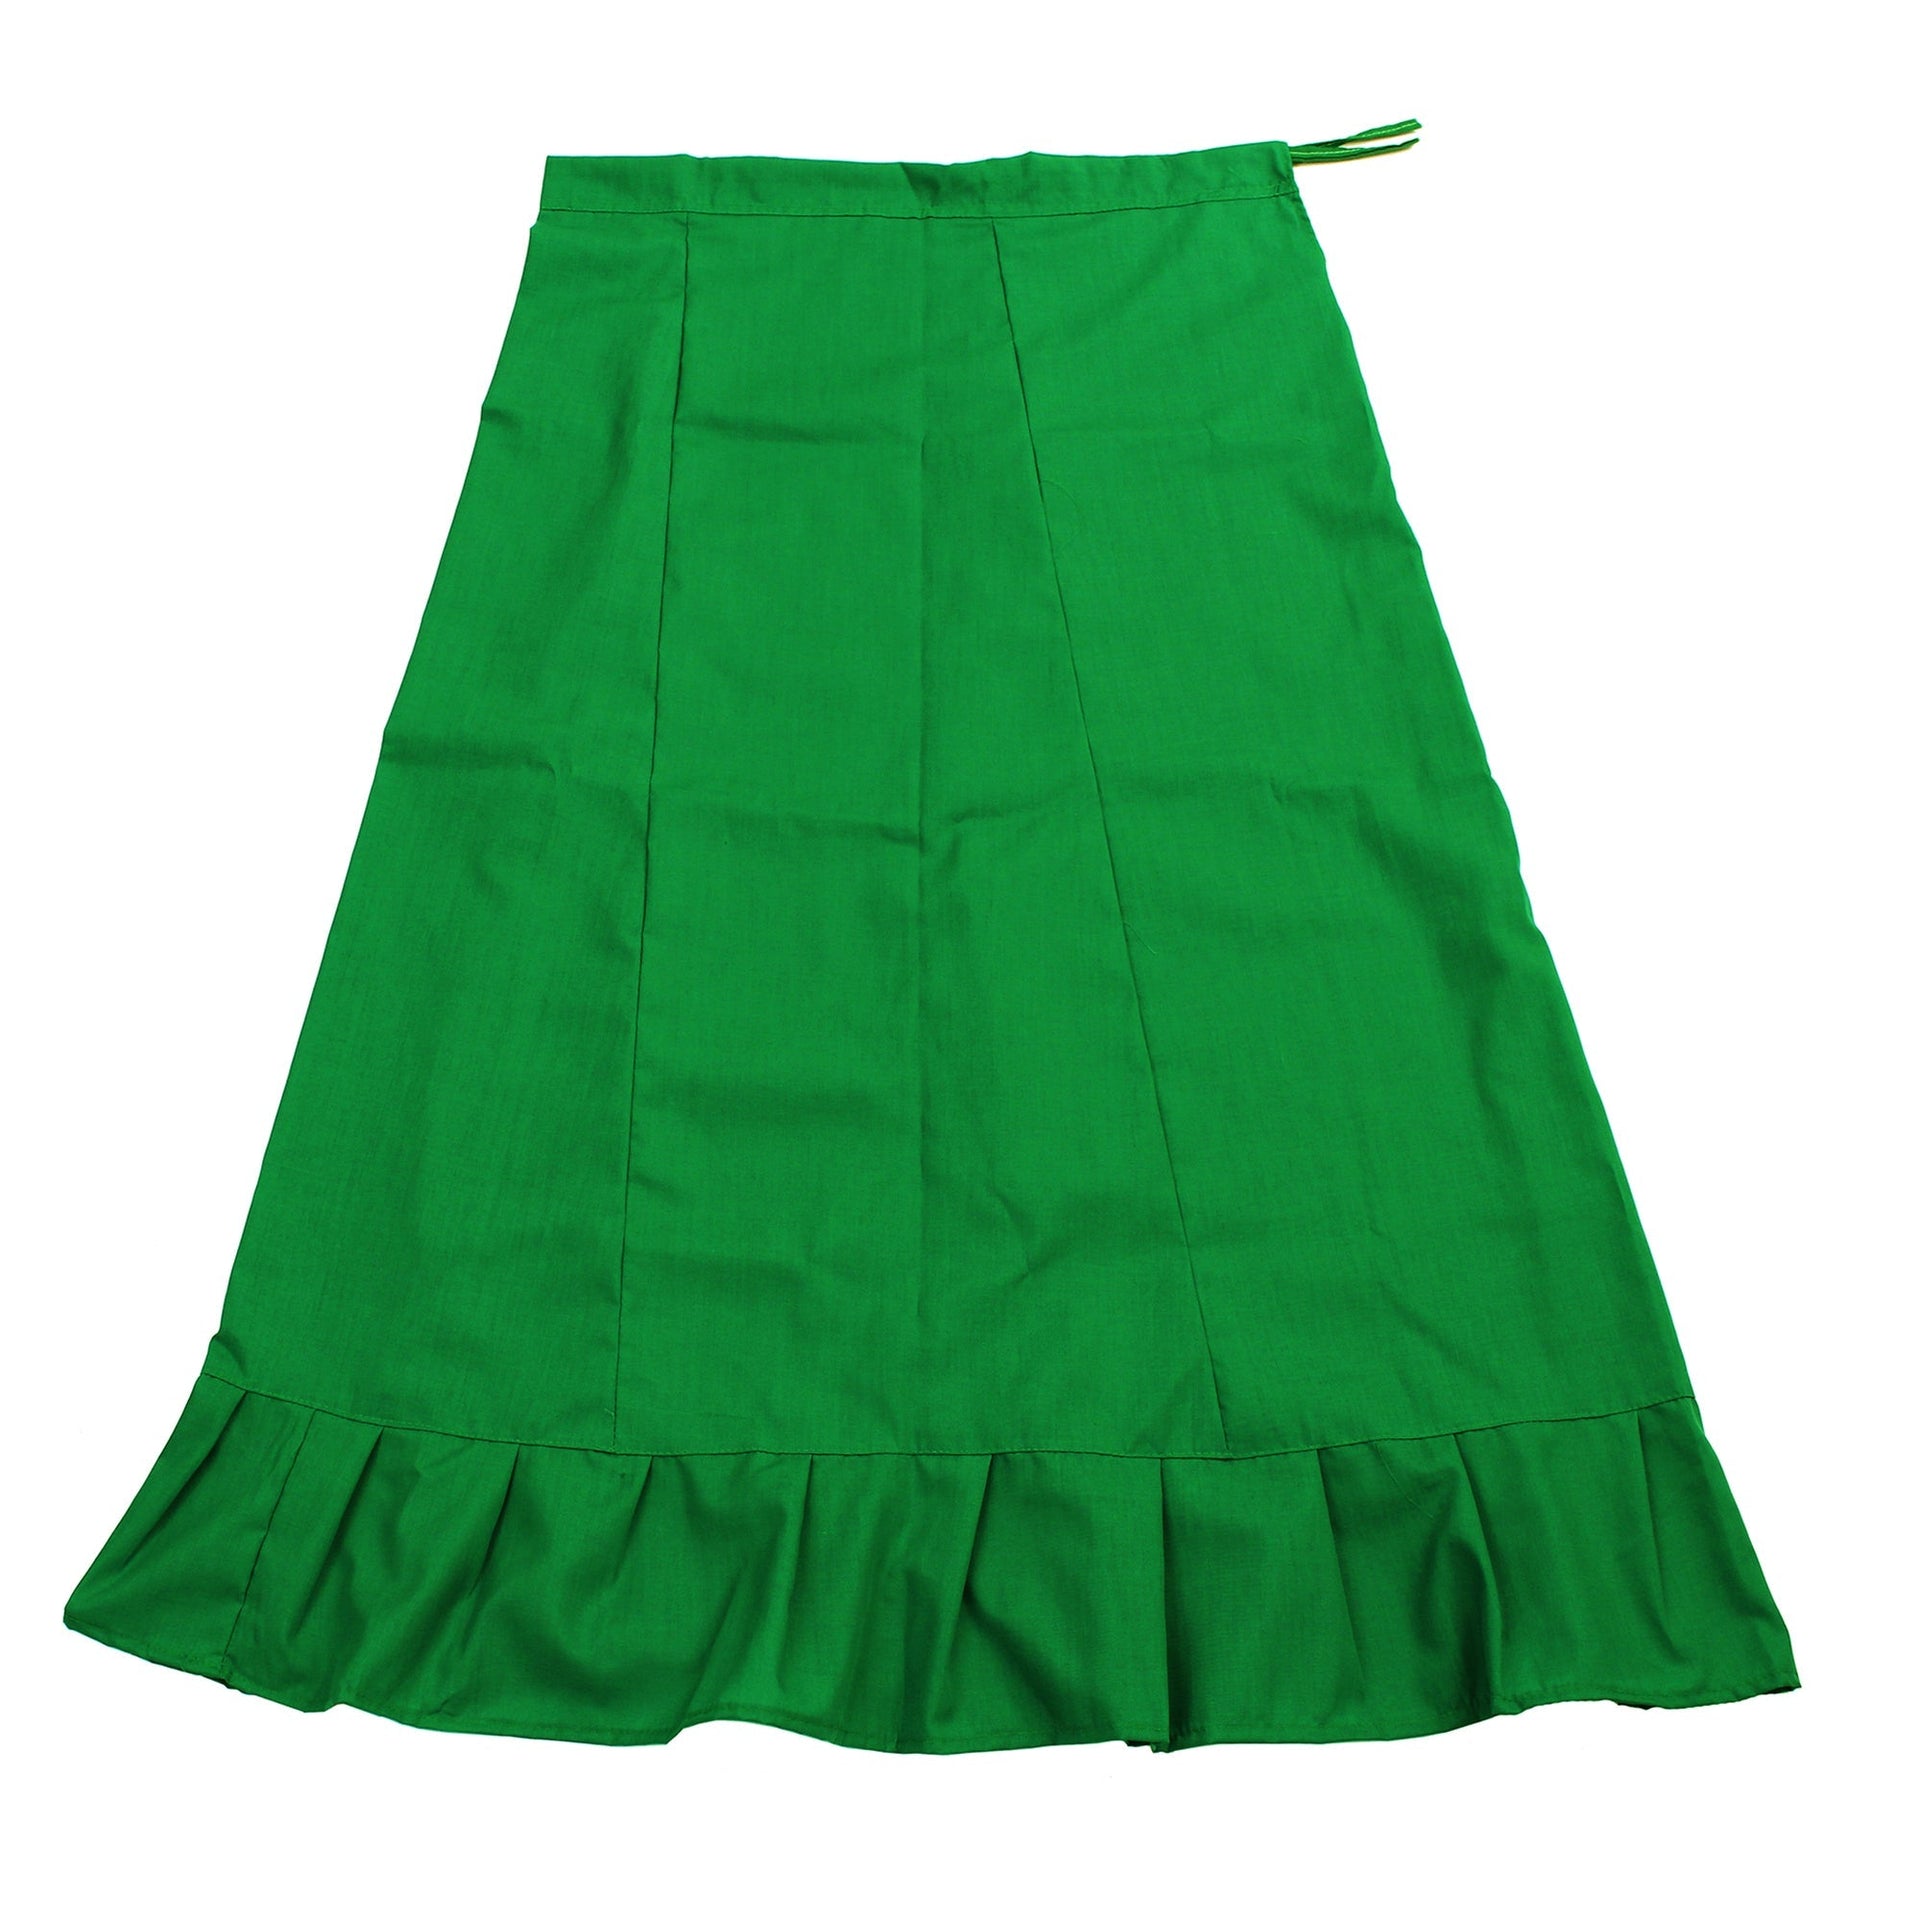 Sari (Saree) Petticoat - Extra Large Size - Underskirts For Sari's